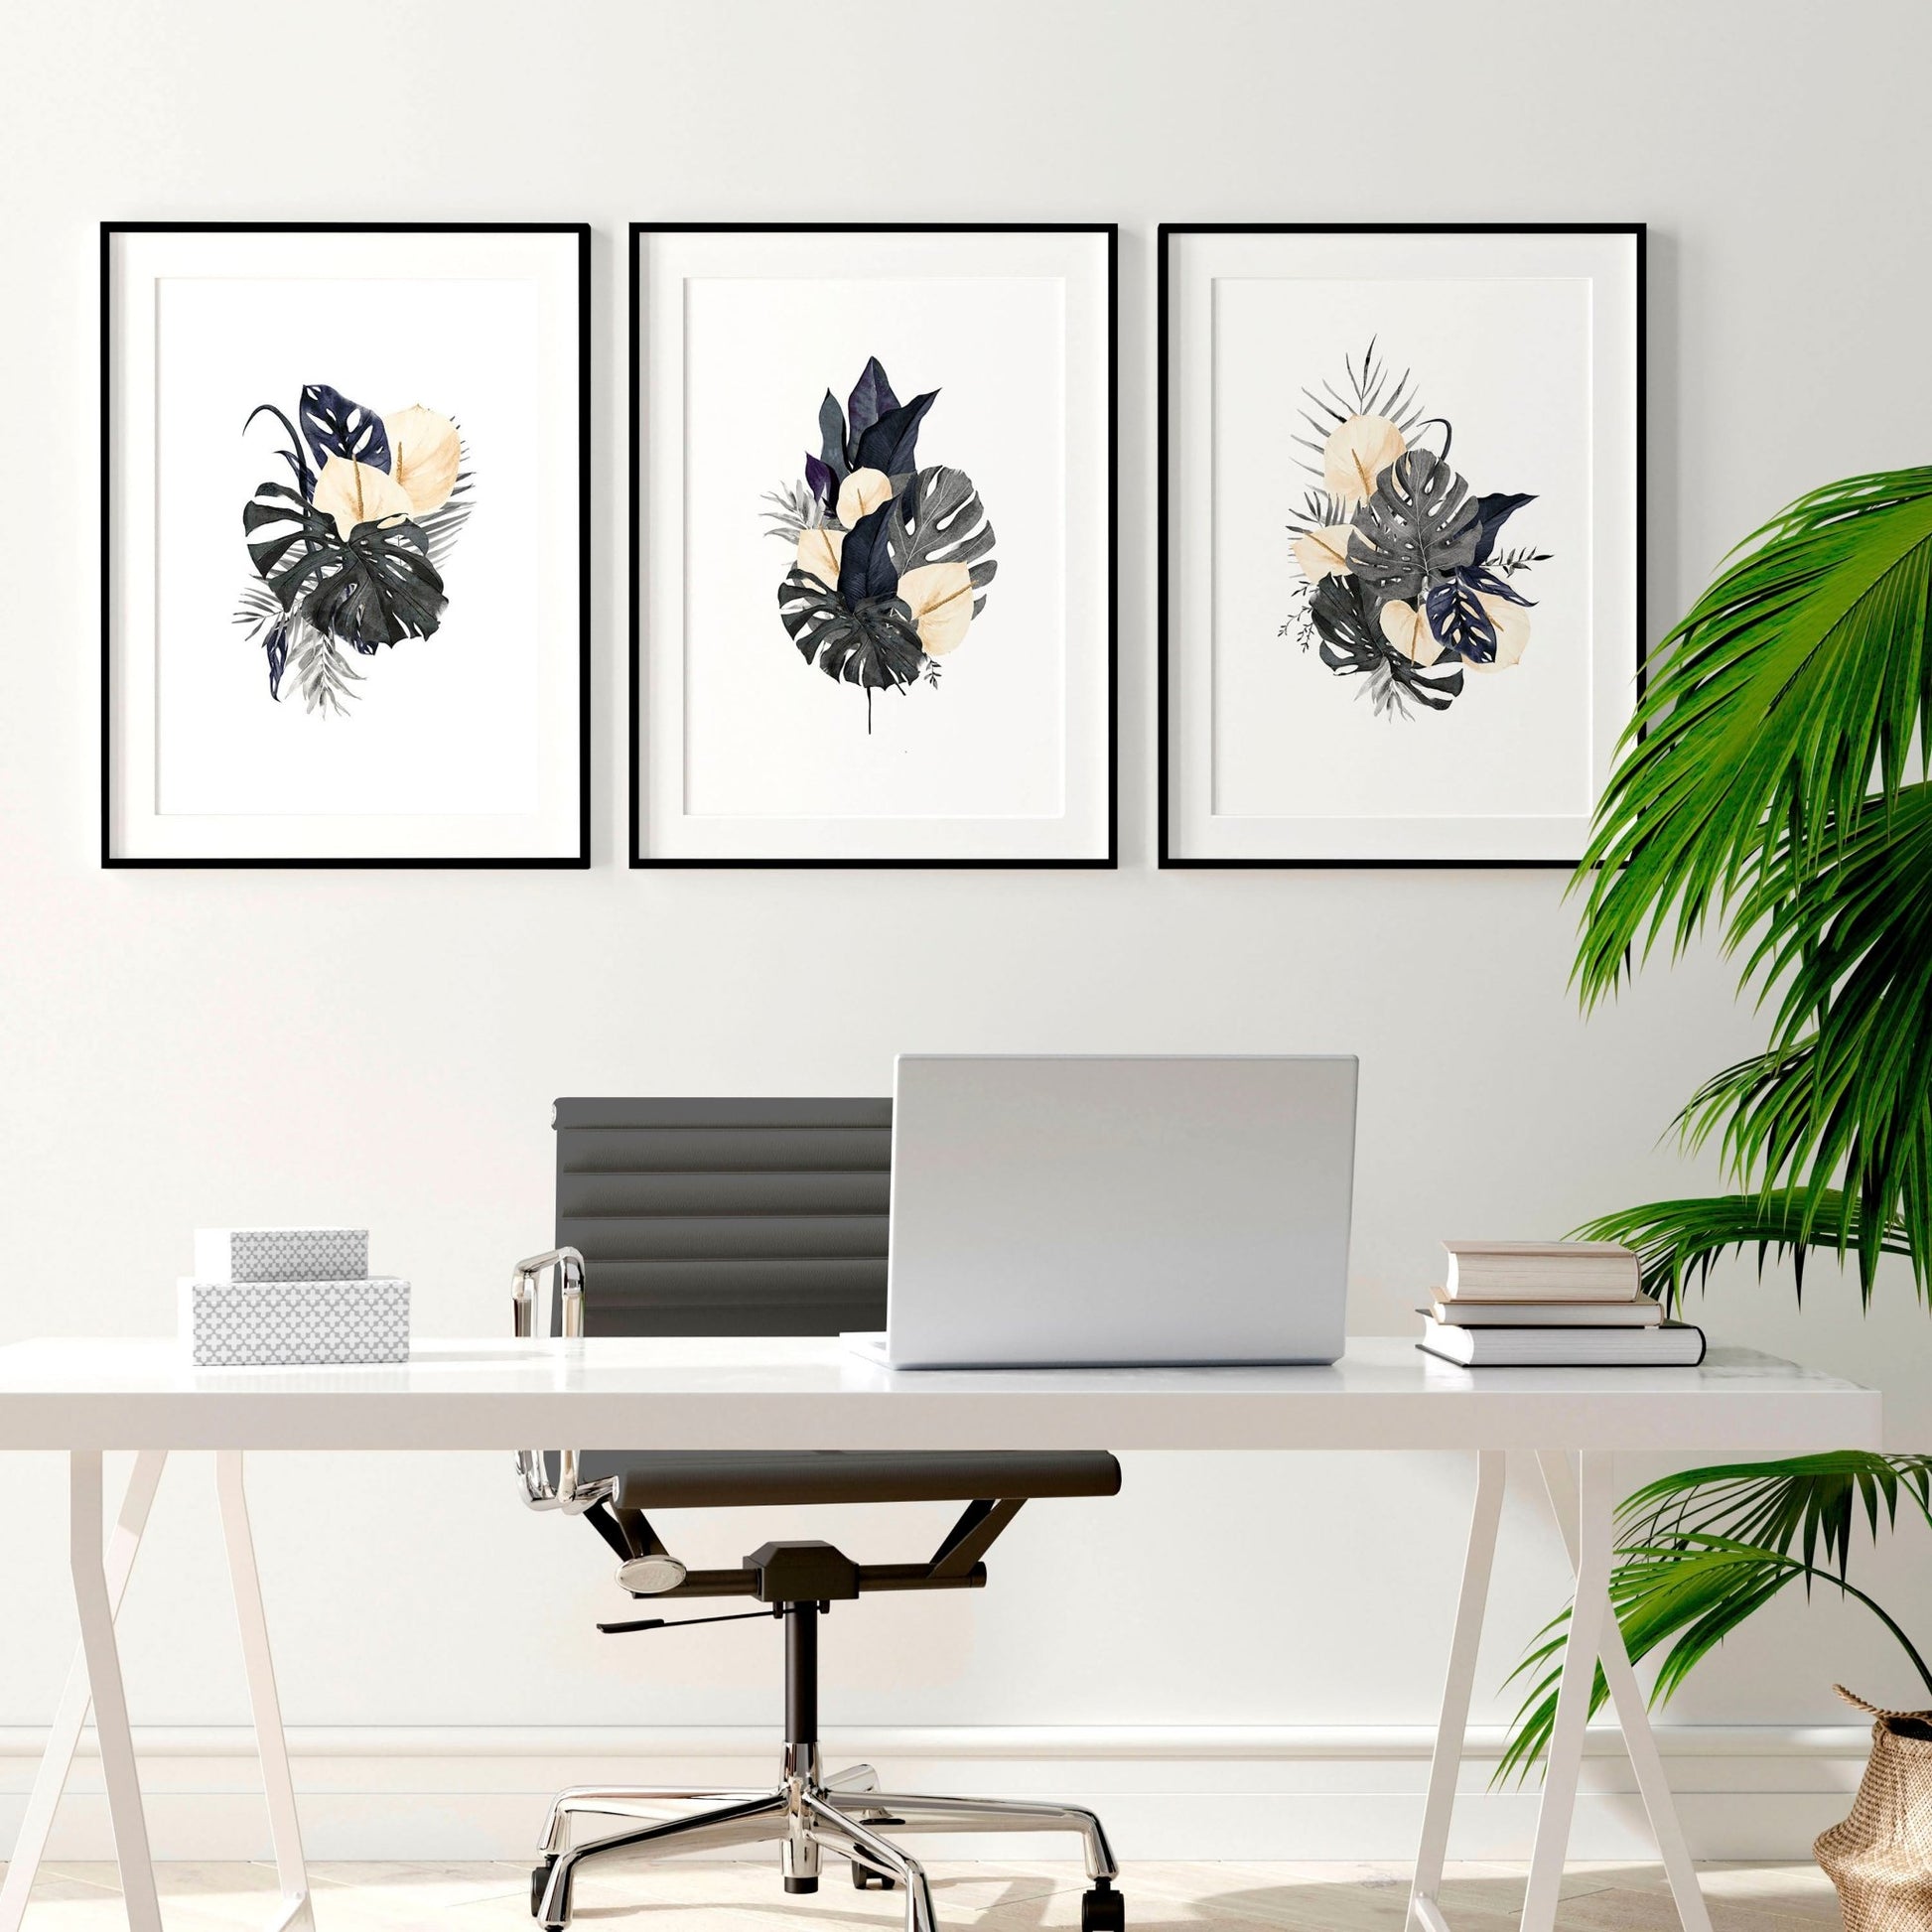 Home office art | set of 3 wall art prints - About Wall Art